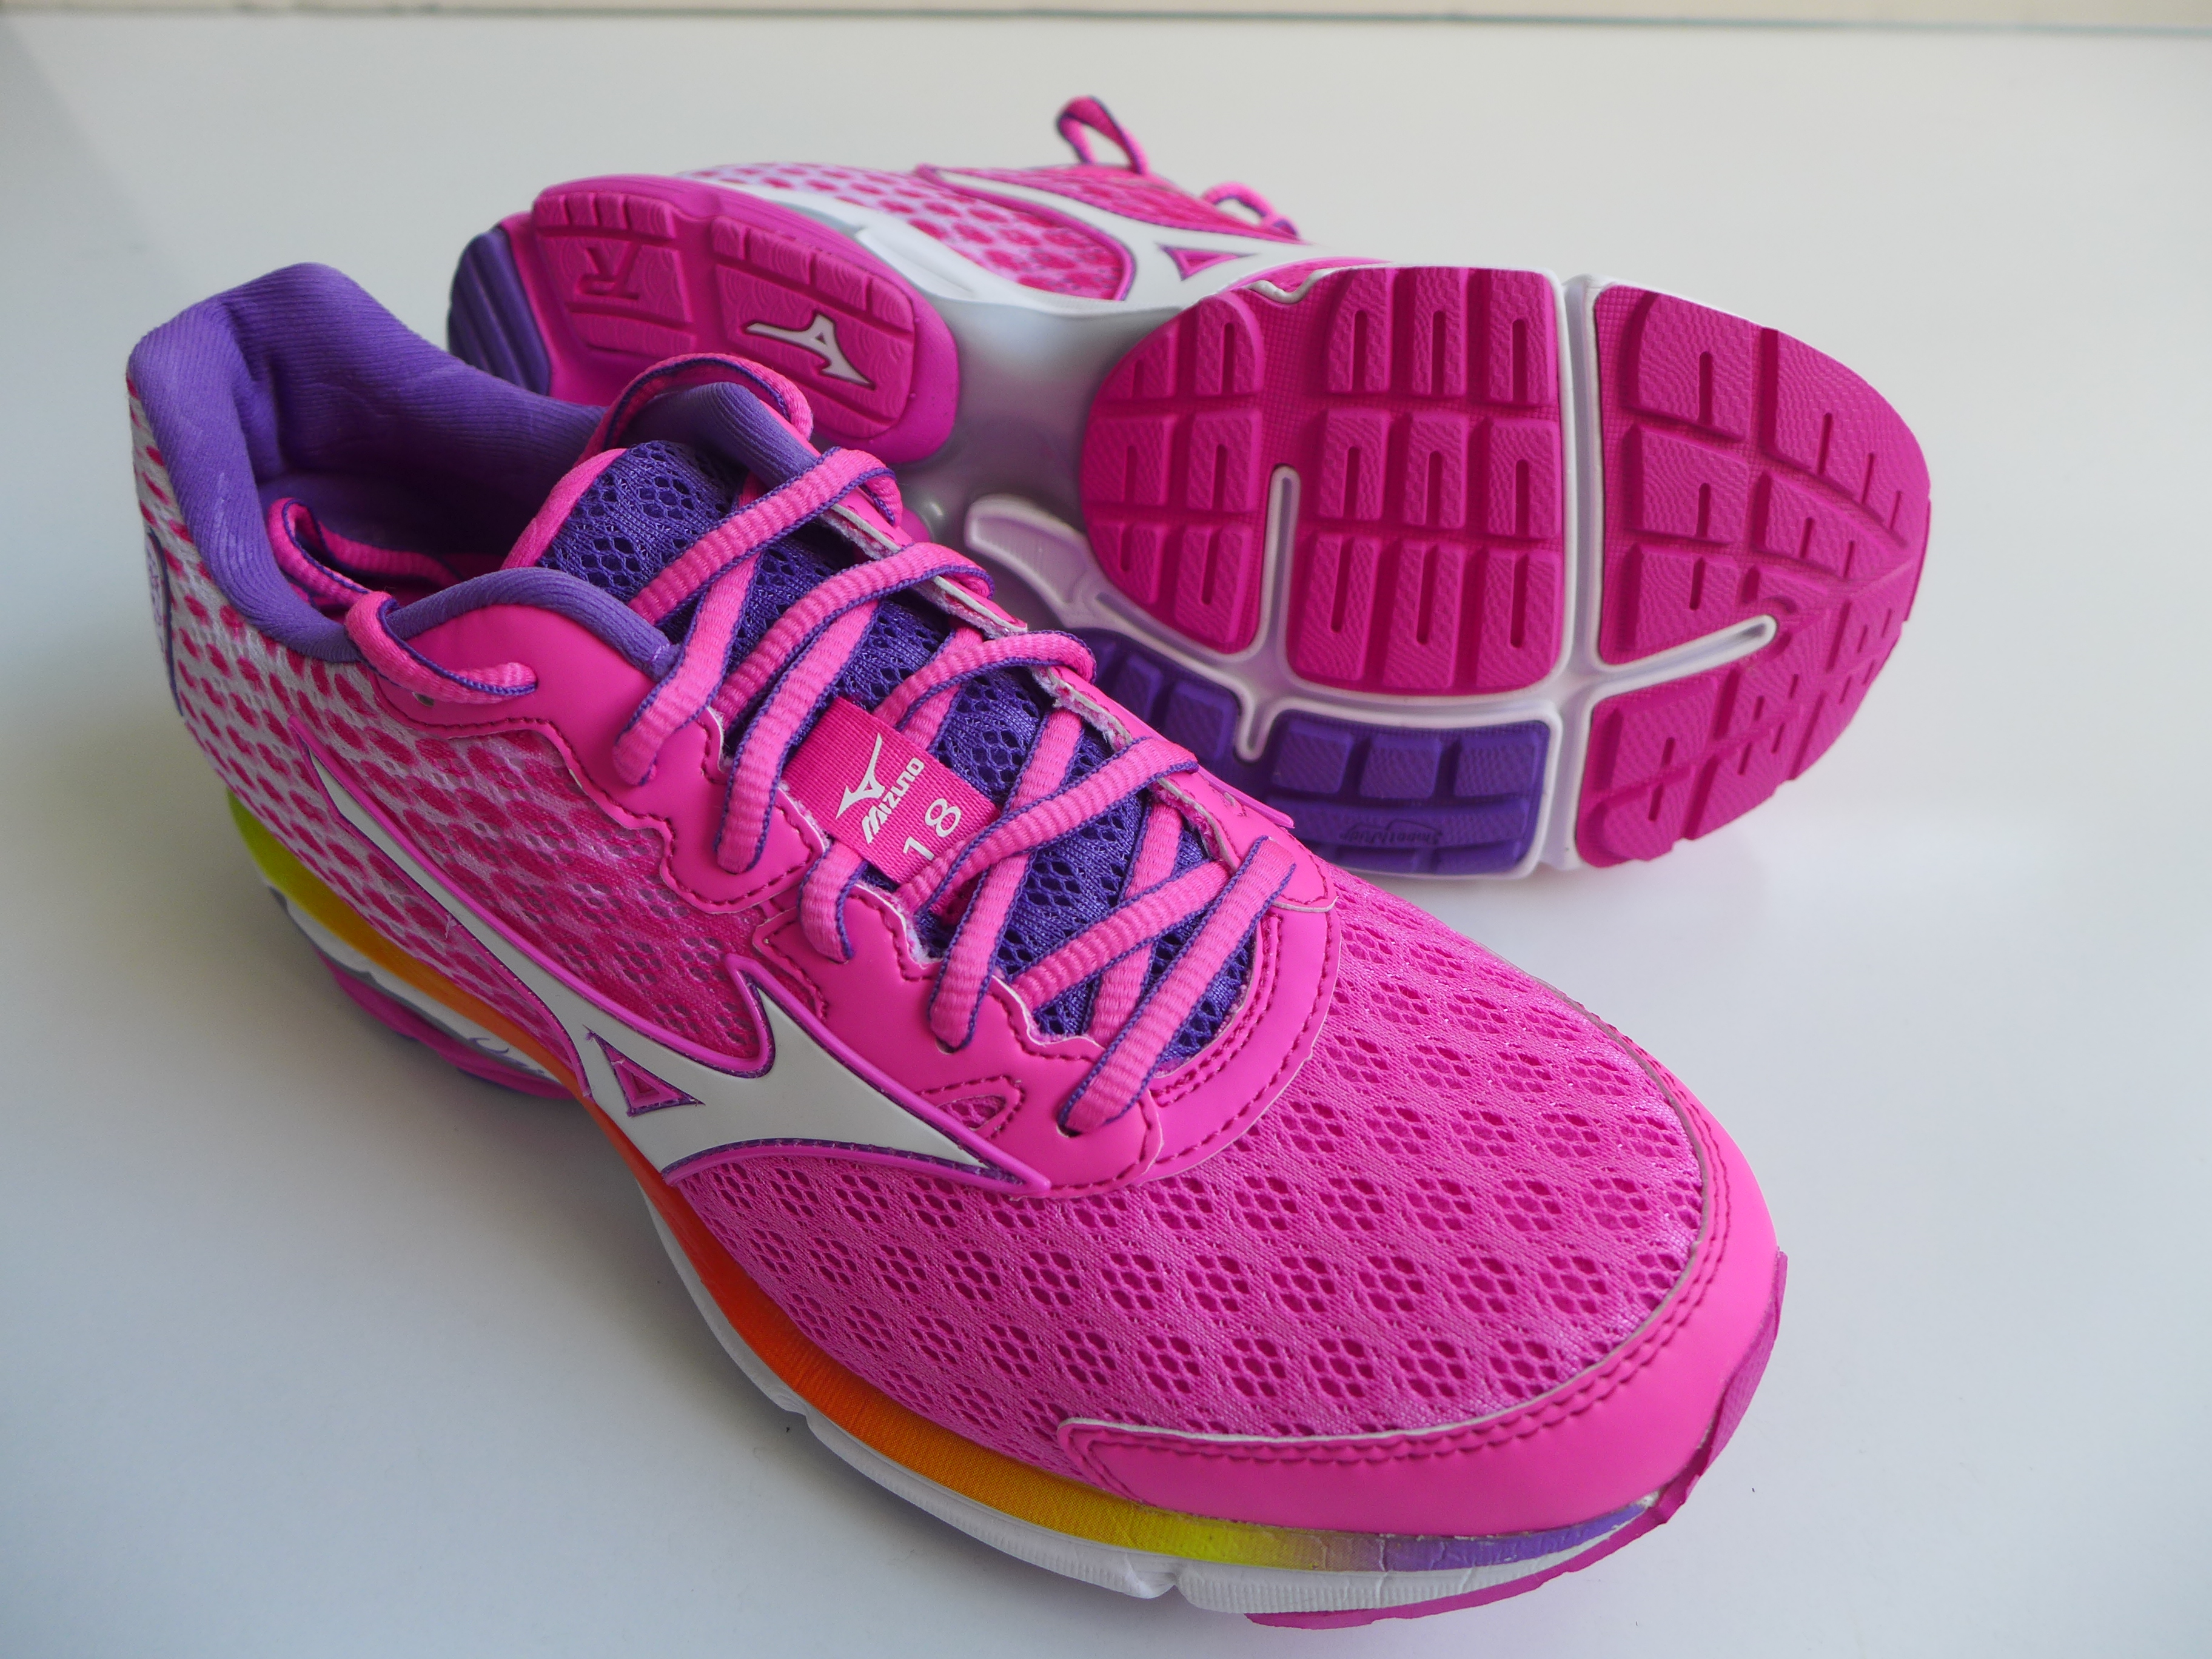 Venta > mizuno wave rider 18 women's running shoes > en stock